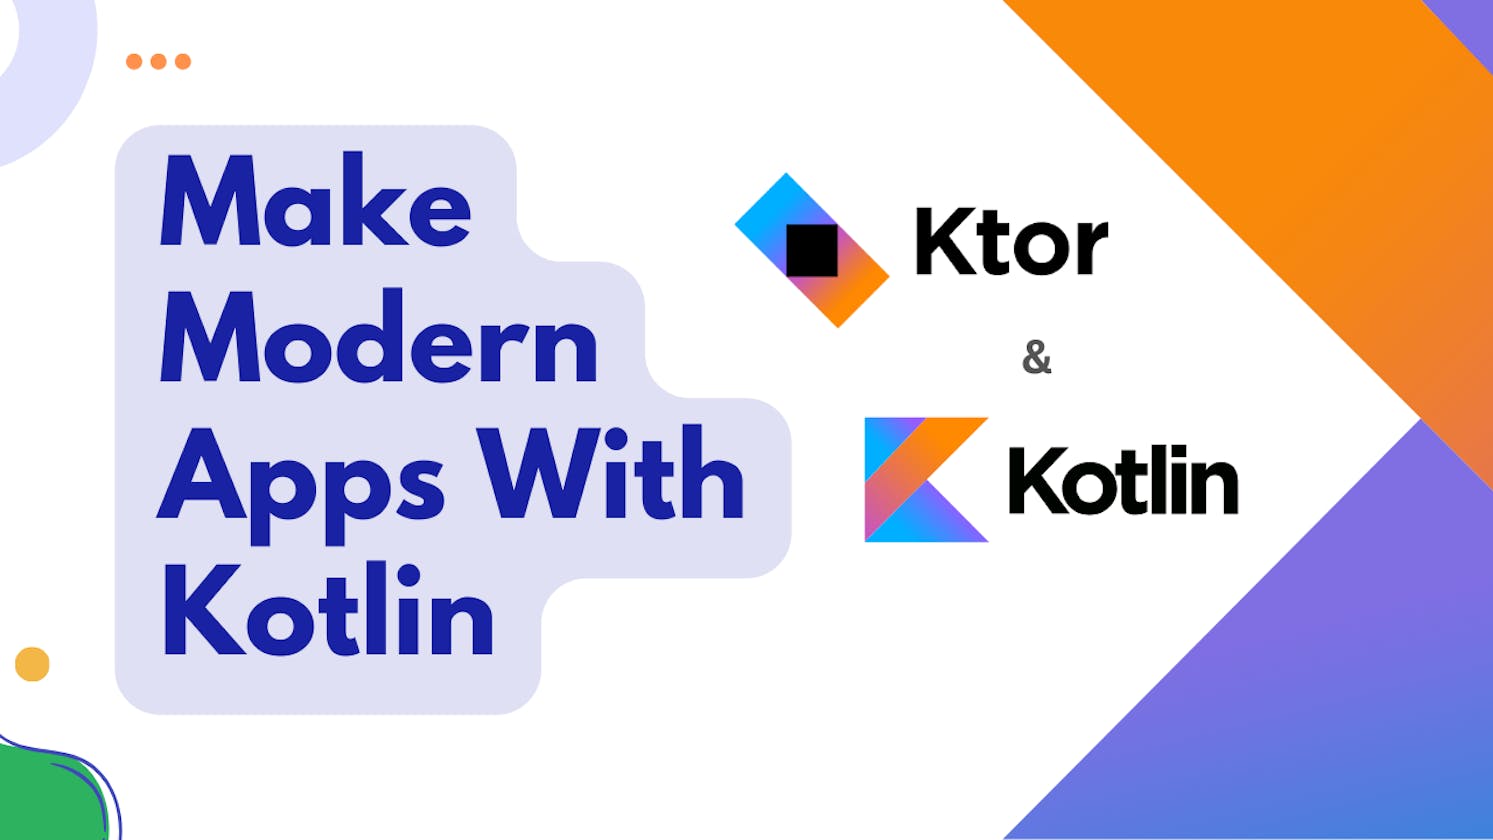 Introducing Ktor: Kotlin's Concurrency Darling - Making Web Dev a Breeze